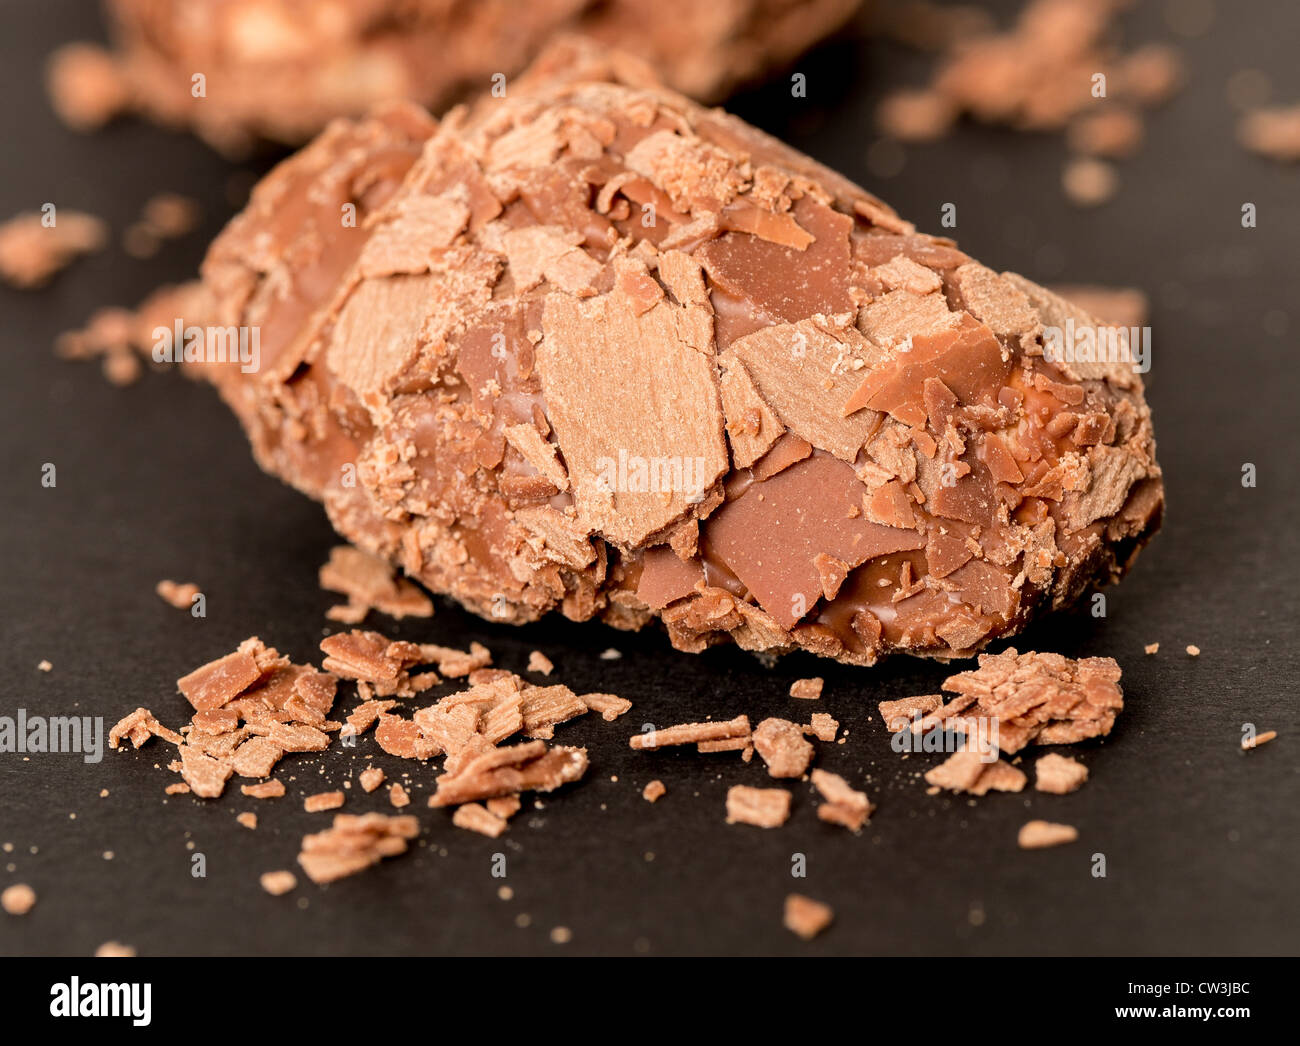 Belgian chocolate truffles - studio shot with a shallow depth of field Stock Photo